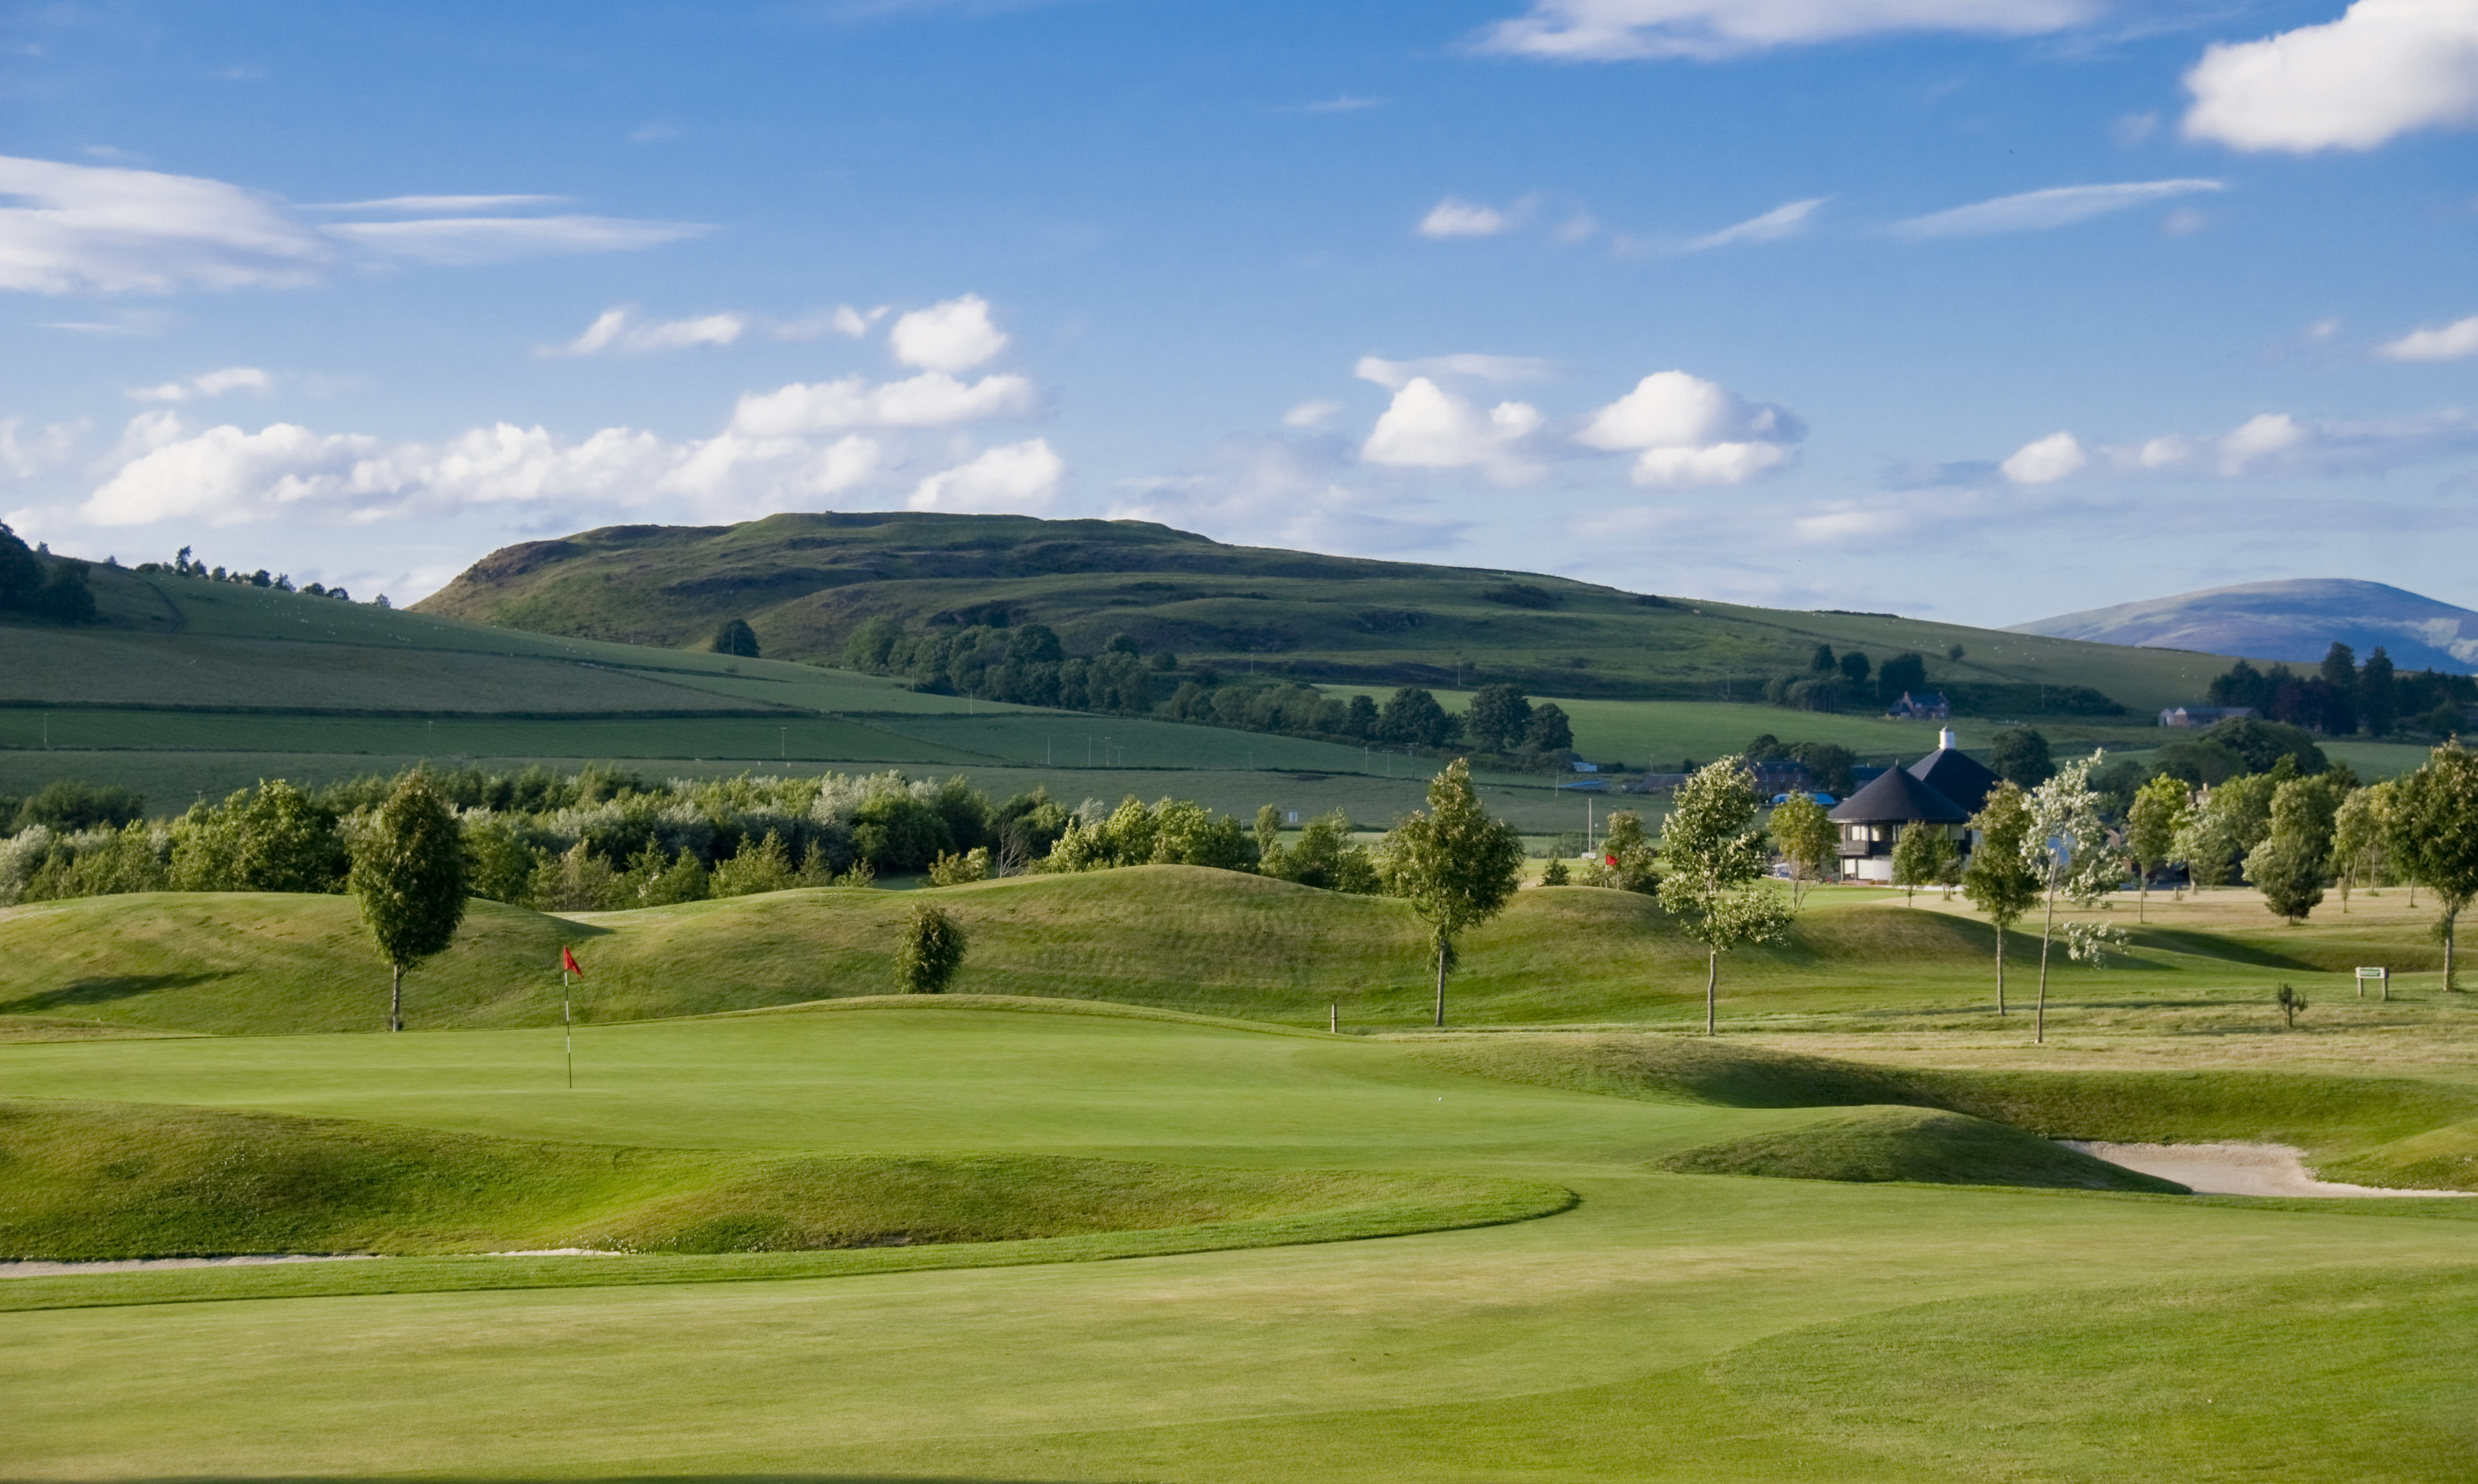 Glenisla golf club house and course in countryside setting near Alyth